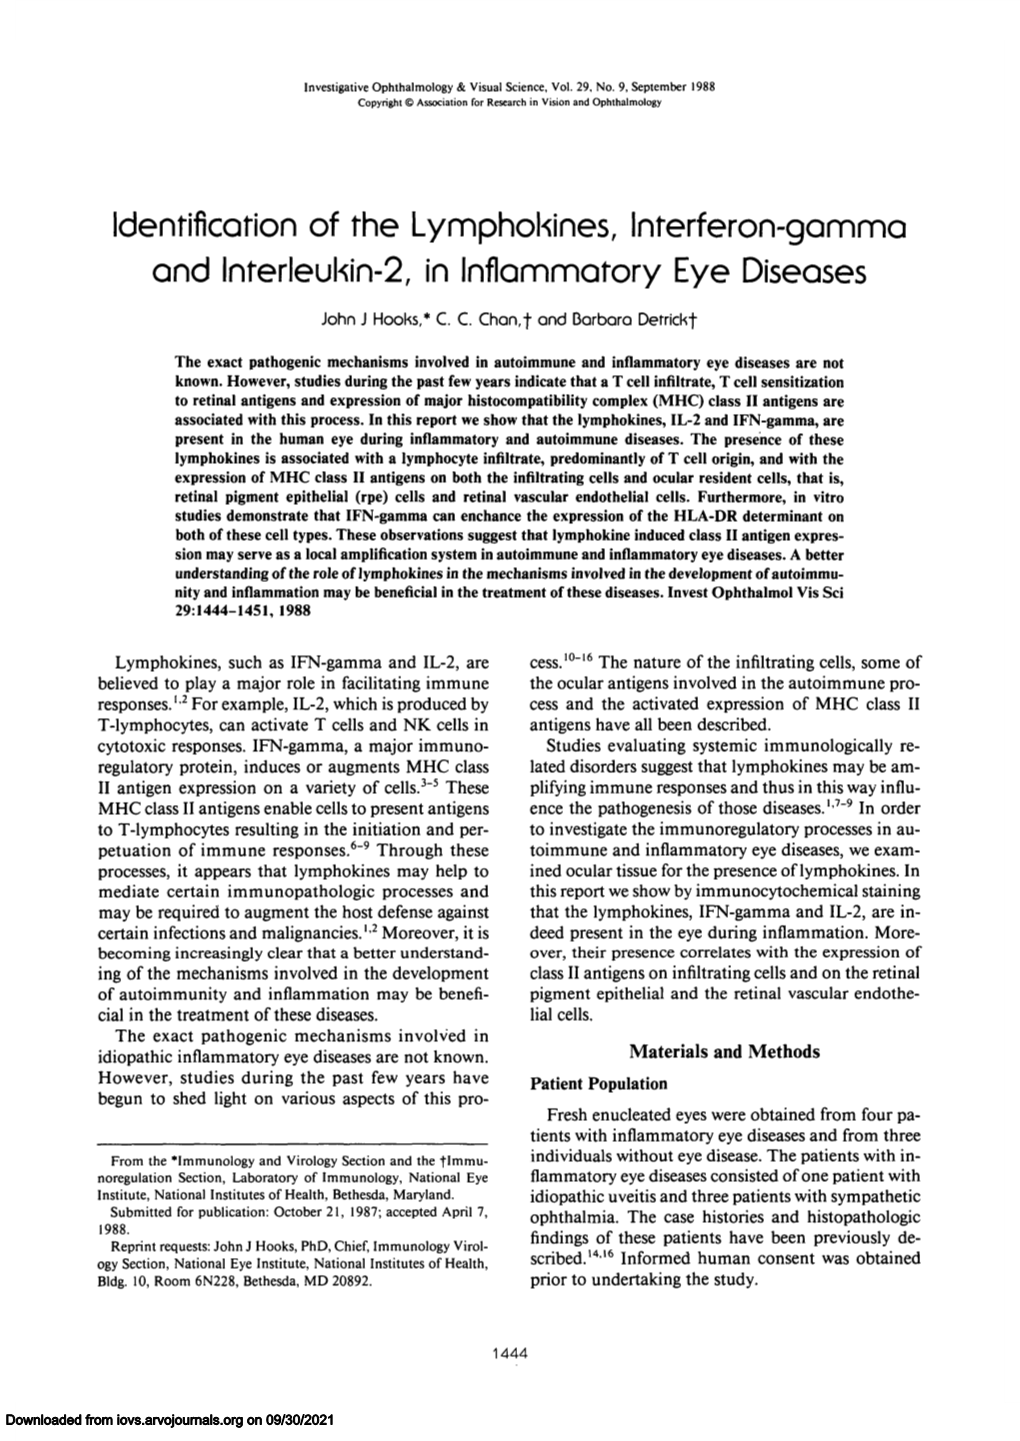 Identification of the Lymphokines, Inferferon-Gamma and Lnterleukin-2, in Inflammatory Eye Diseases